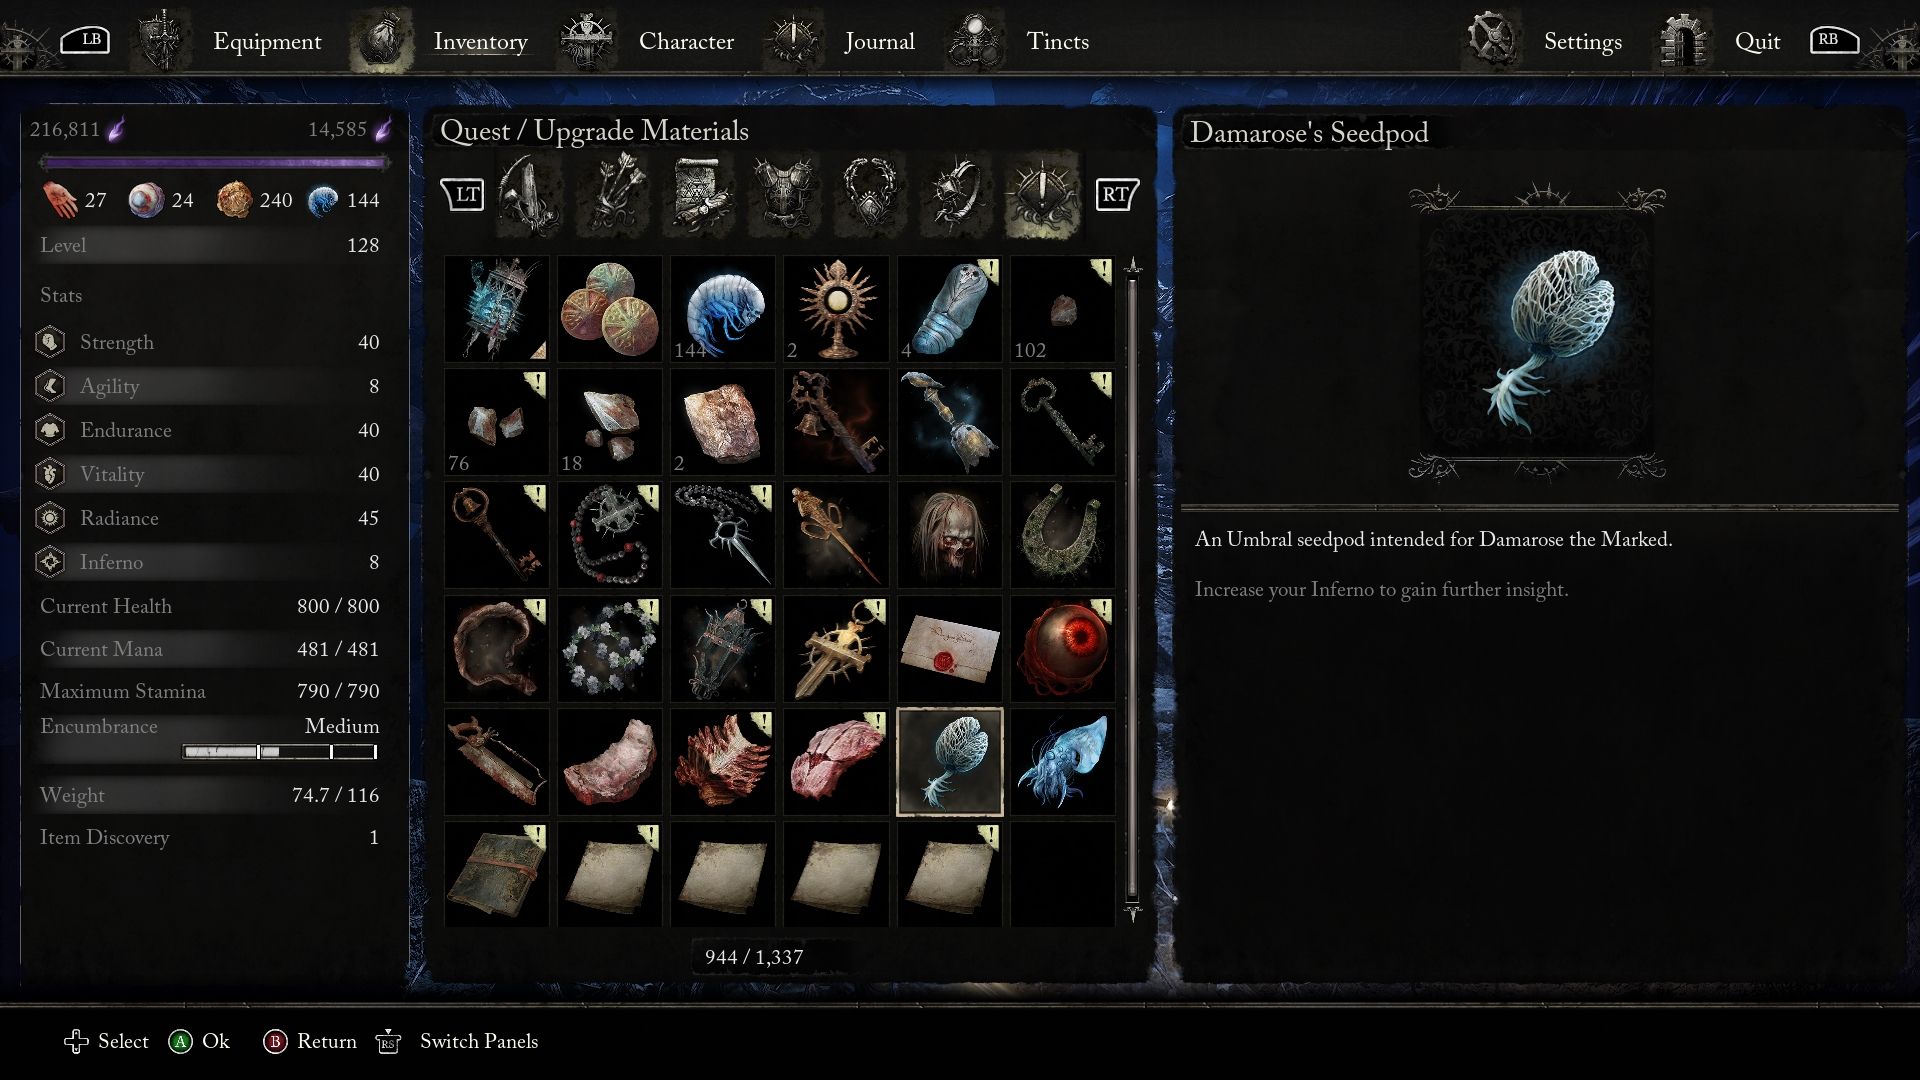 Damarose's Seedpod item description Lords of the Fallen